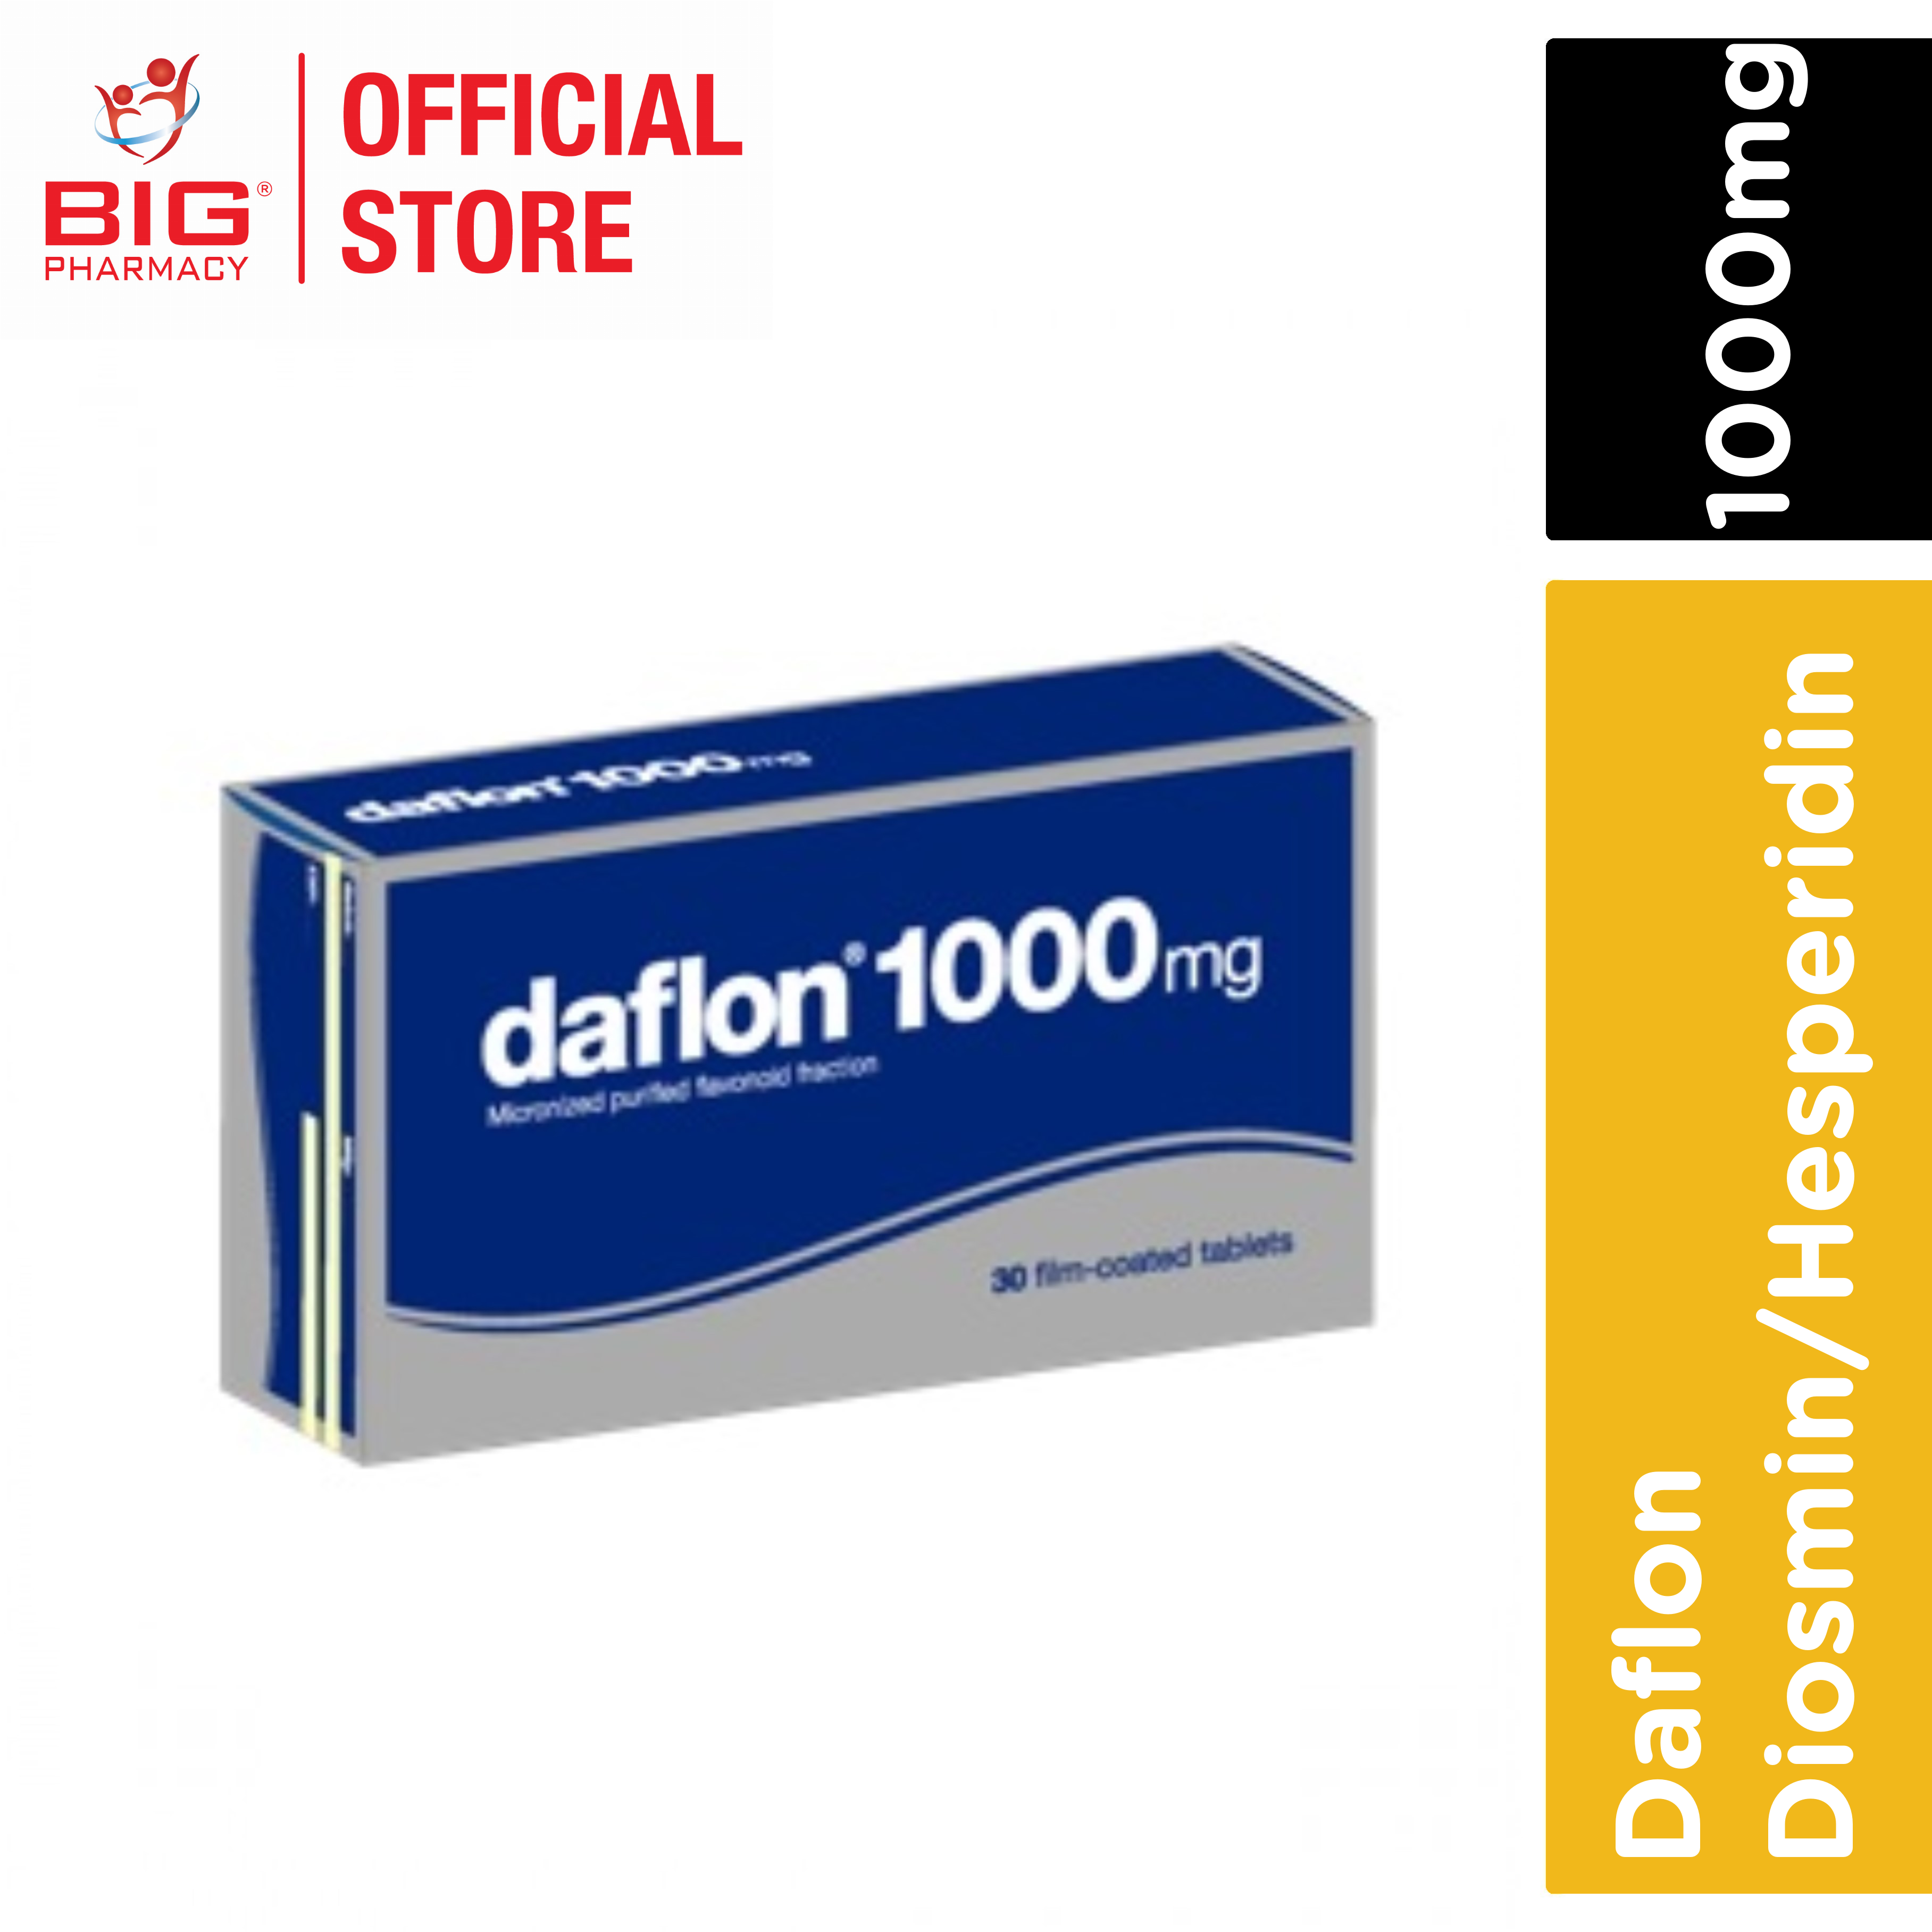  Daflon 1000mg